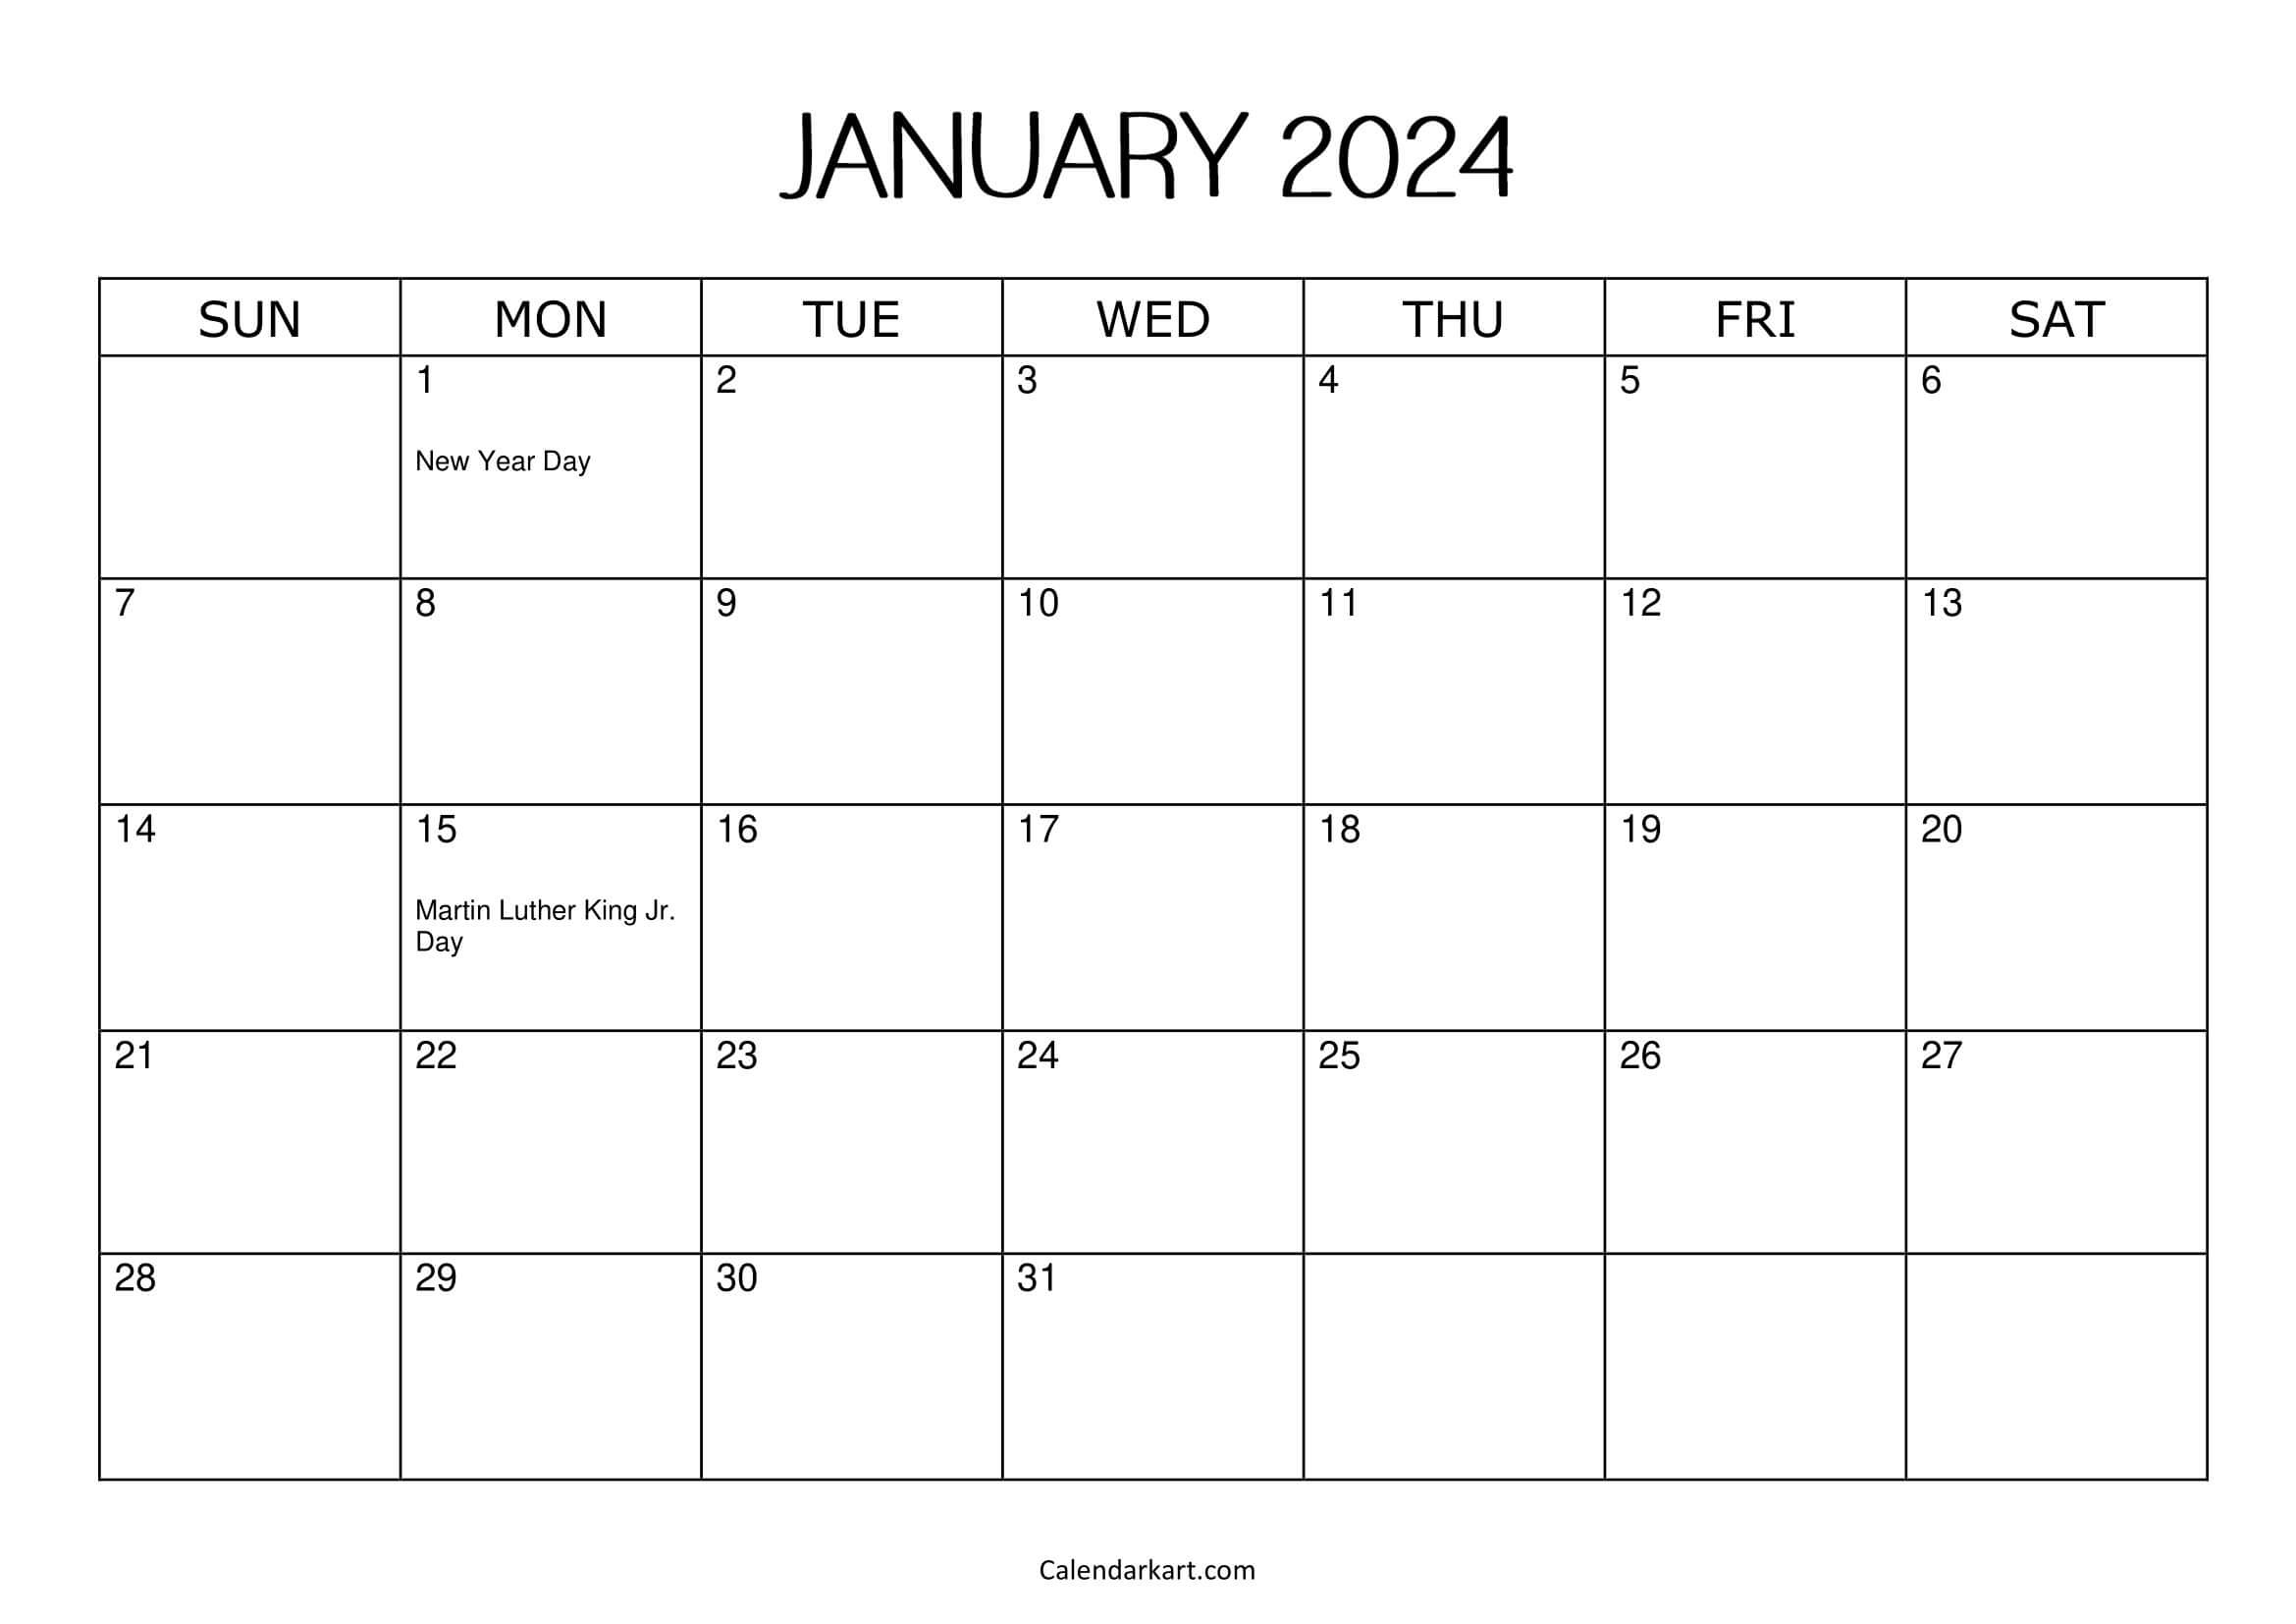 Free Printable January 2024 Calendars - Calendarkart in Free Printable Calendar 2024 By Month With Holidays